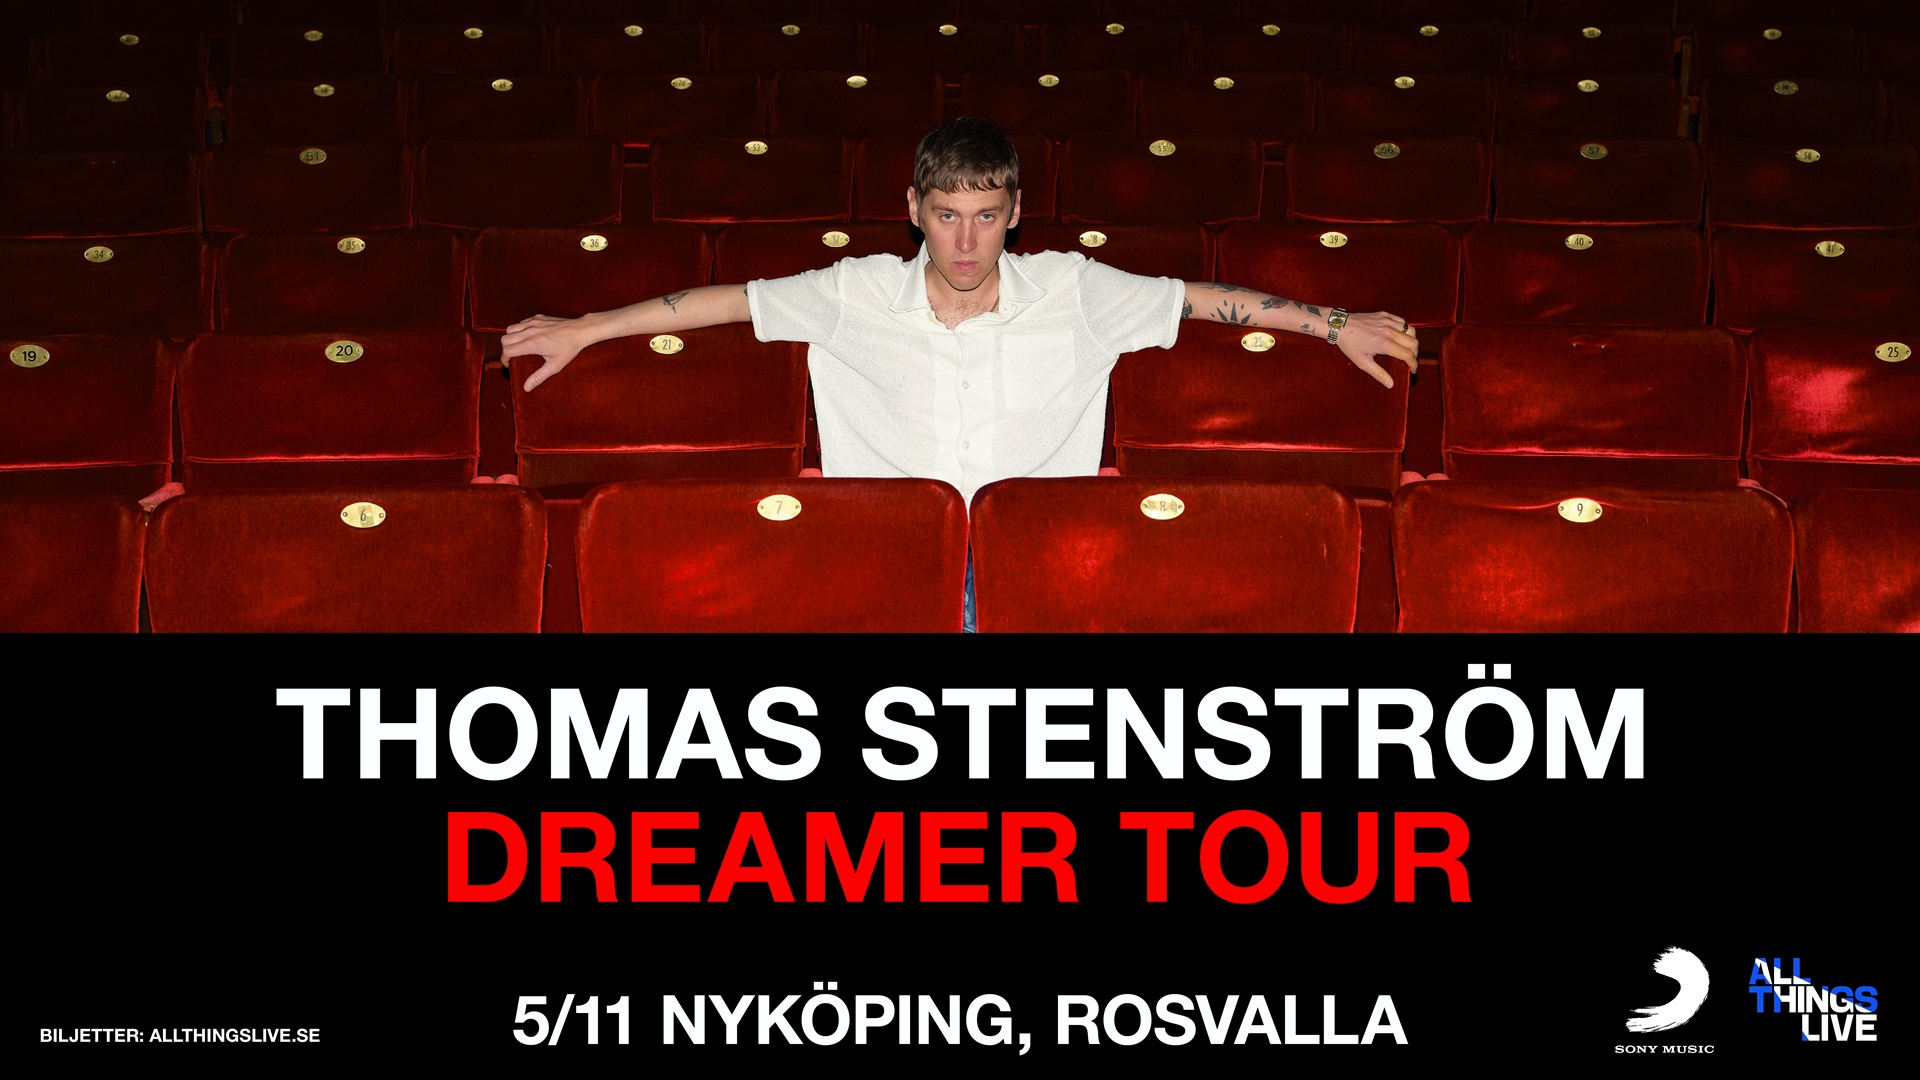 Thomas Stenstrom - Dreamer Tour